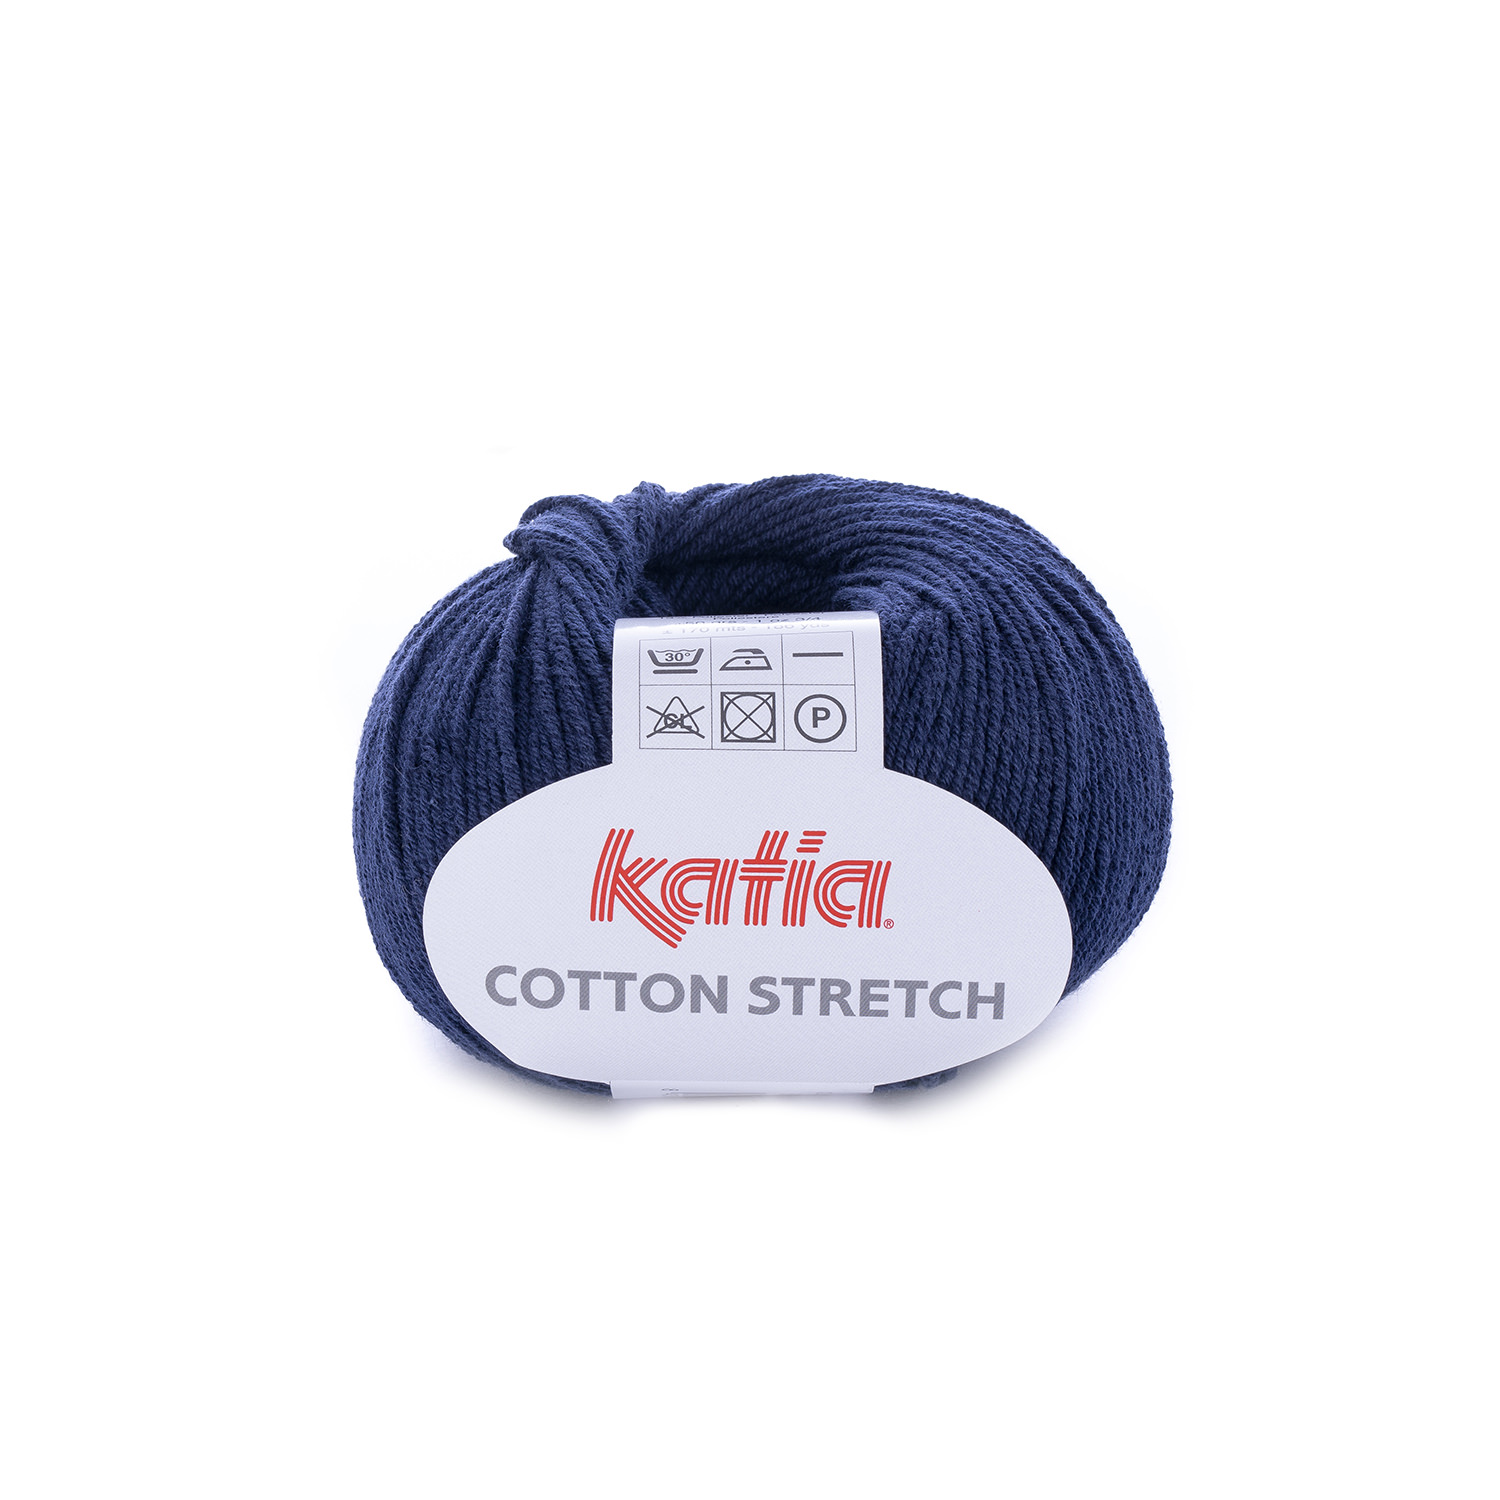 https://www.katia.com/files/lanas/865/yarn-wool-cottonstretch-knit-cotton-polyester-dark-blue-spring-summer-katia-5-g.jpg